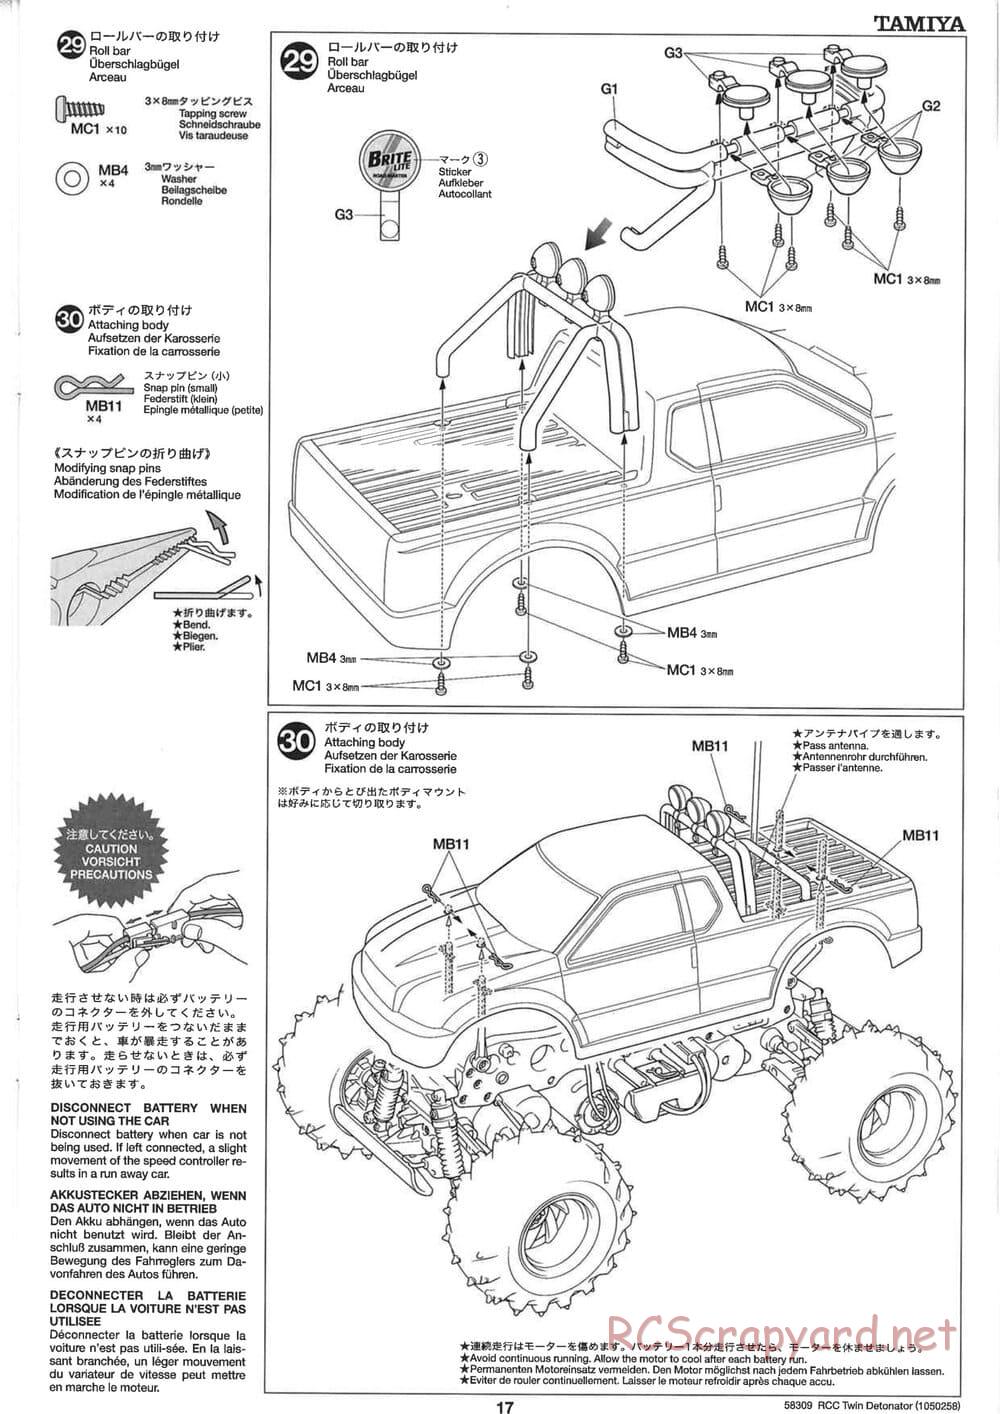 Tamiya - Twin Detonator - WR-01 Chassis - Manual - Page 17